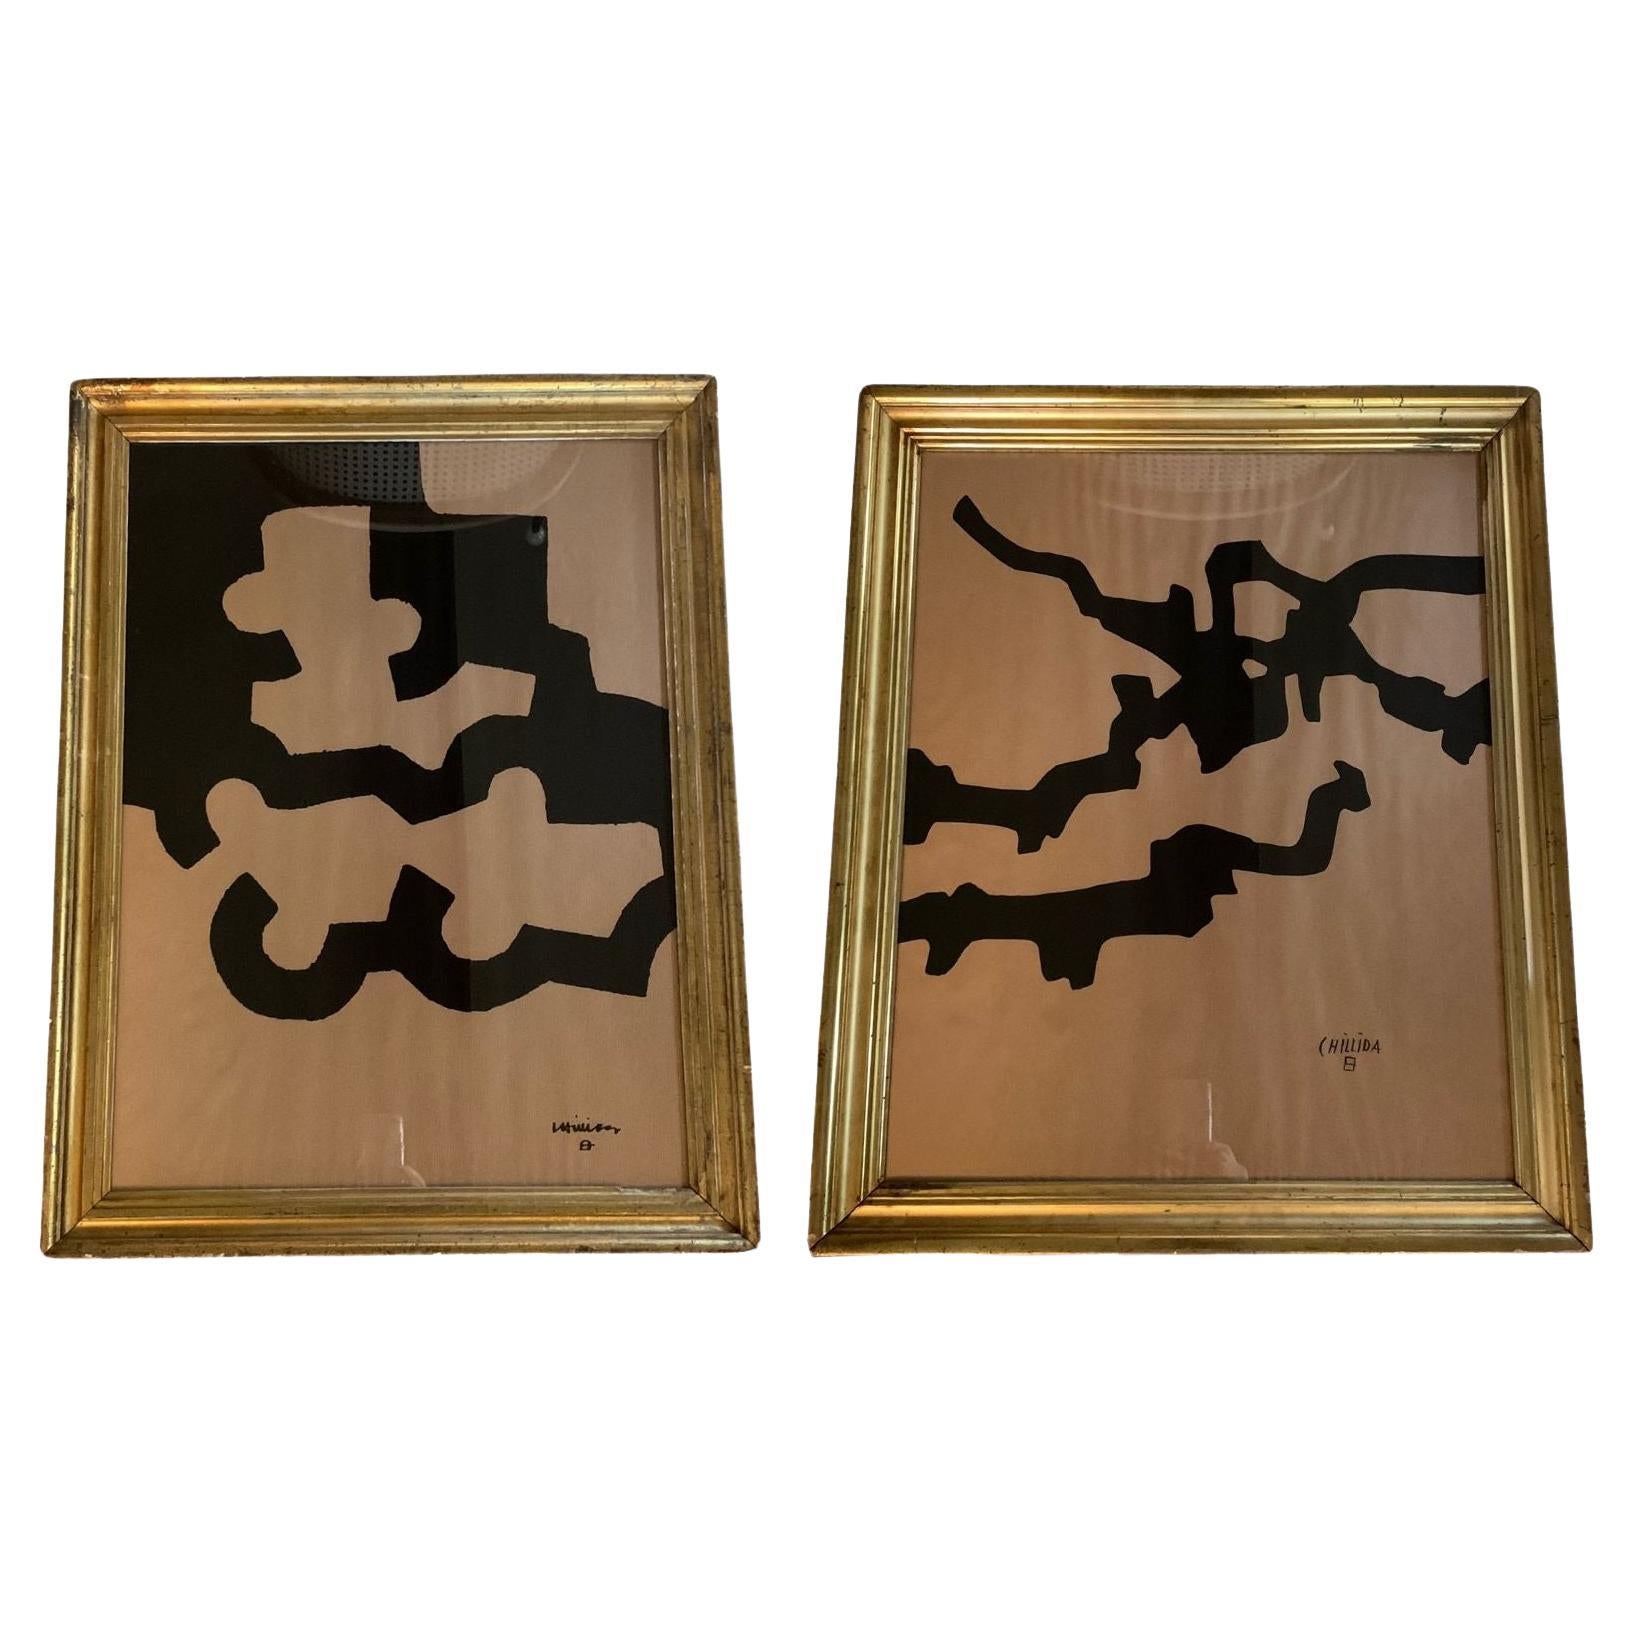 Pair of Contemporary Prints, Spanish Artist Eduardo Chillida, Custom Gold Frames